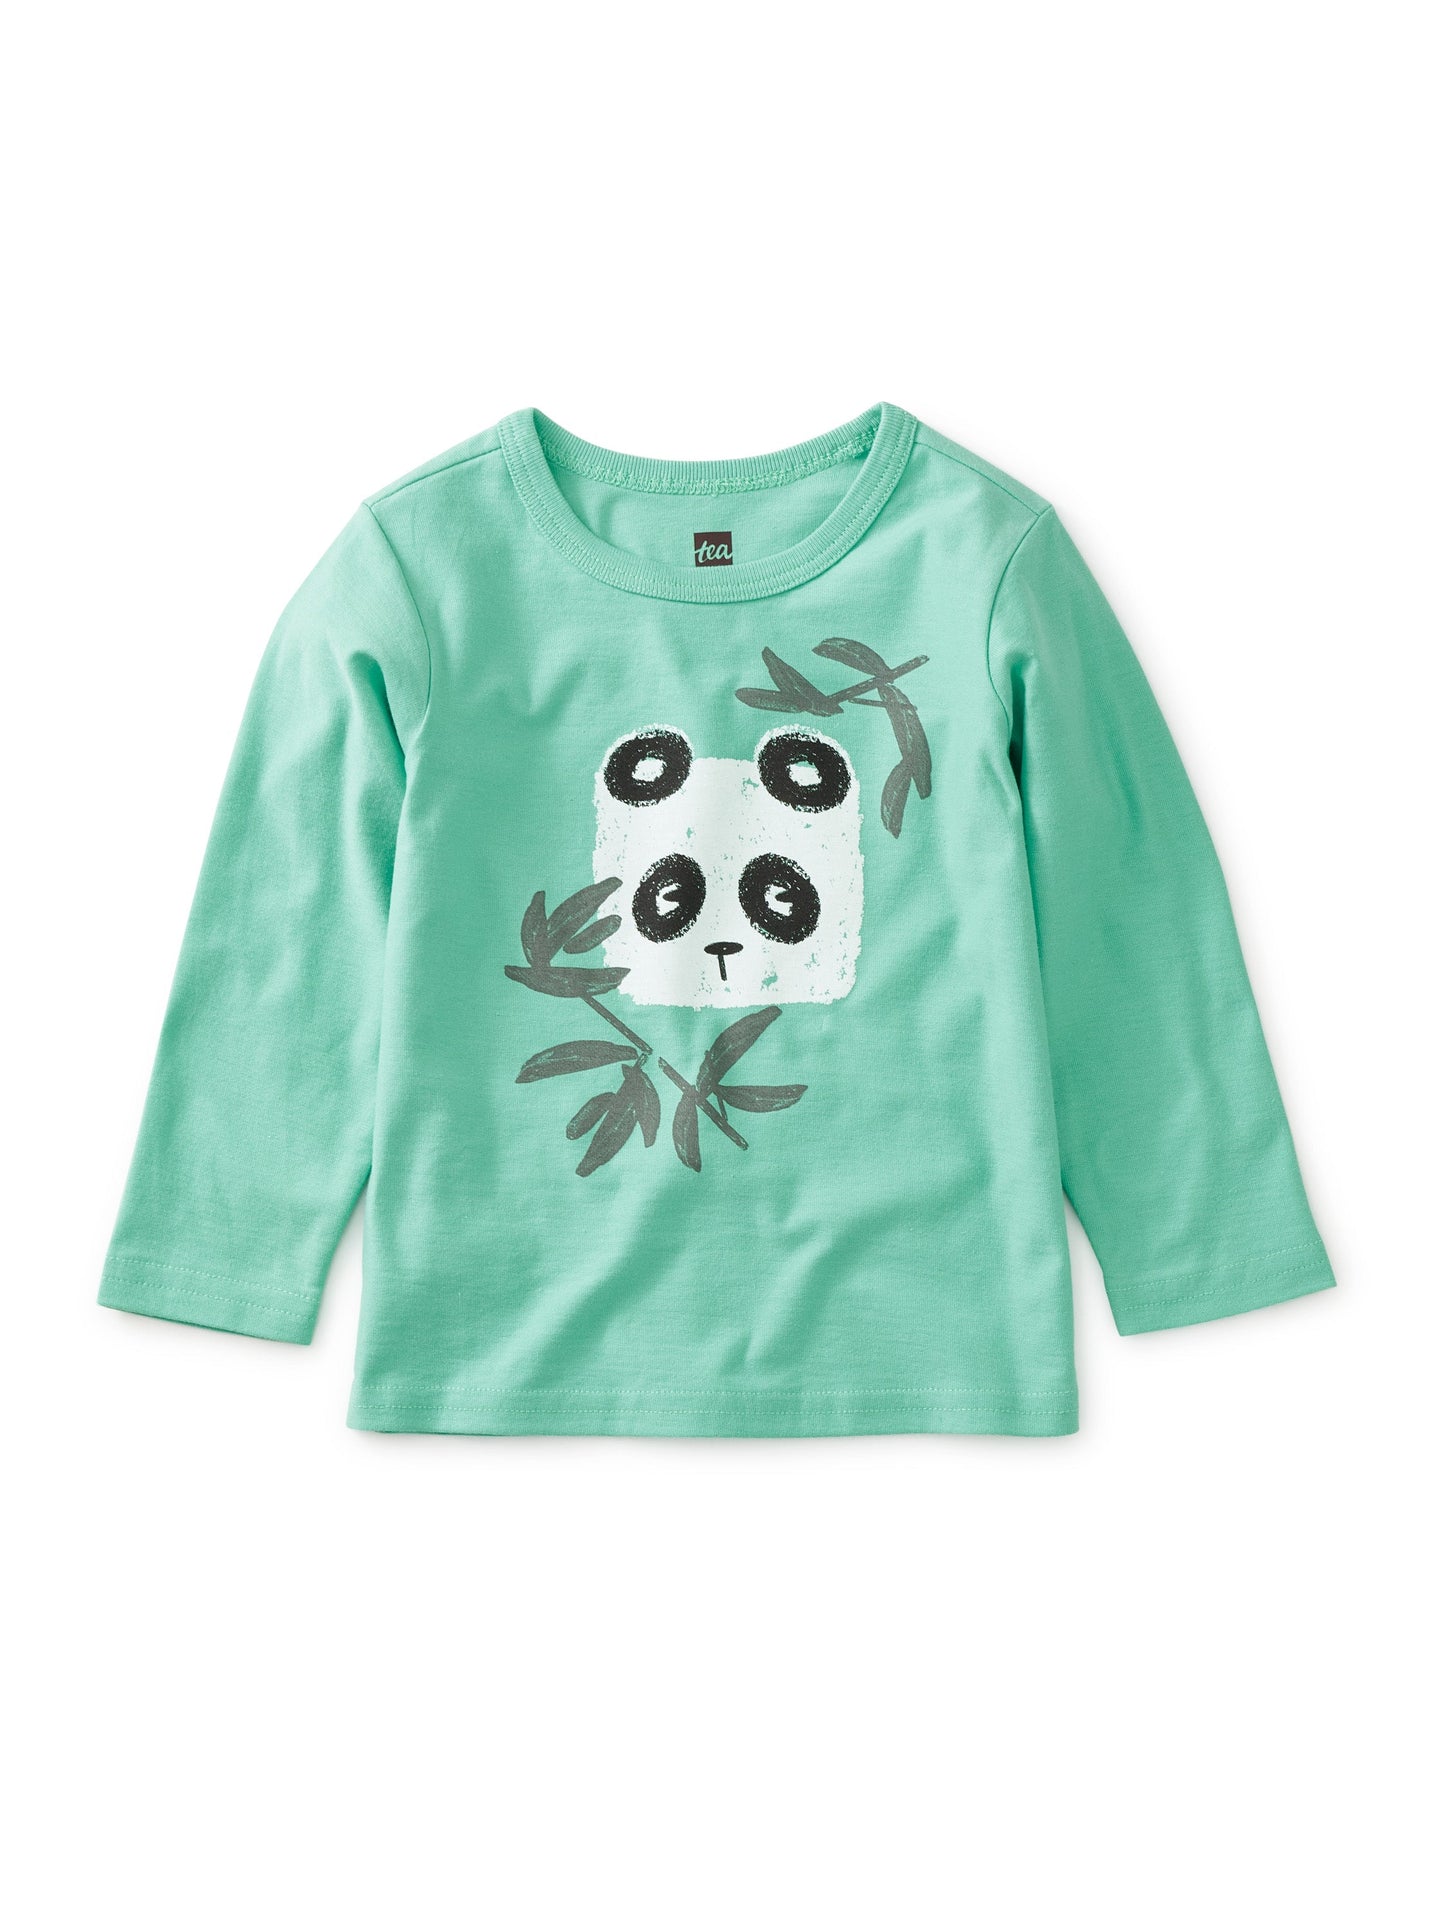 Turquoise Panda Top 130 BABY BOYS/NEUTRAL APPAREL Tea 6-9m 